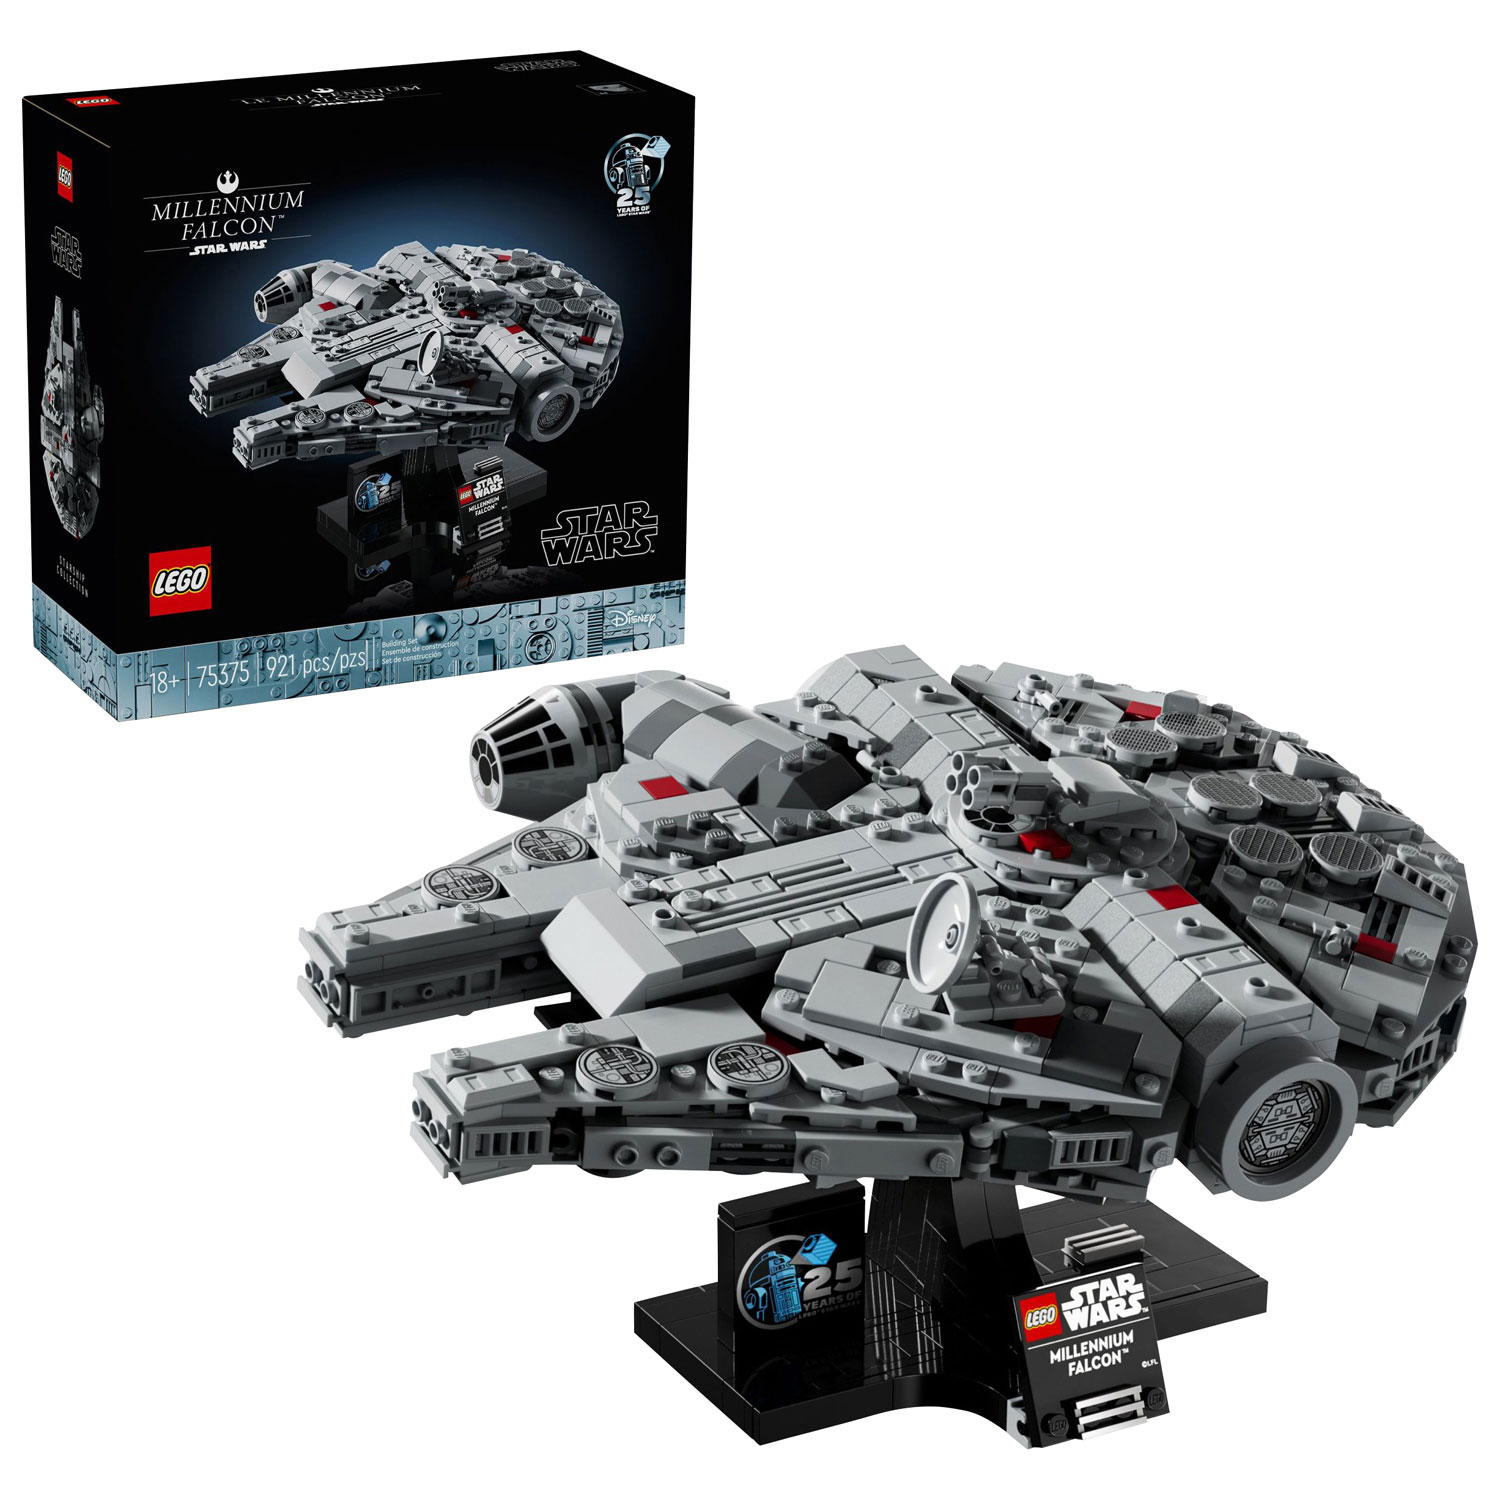 LEGO Star Wars: Collectible Millennium Falcon Starship Model - 921 Pieces (75375)